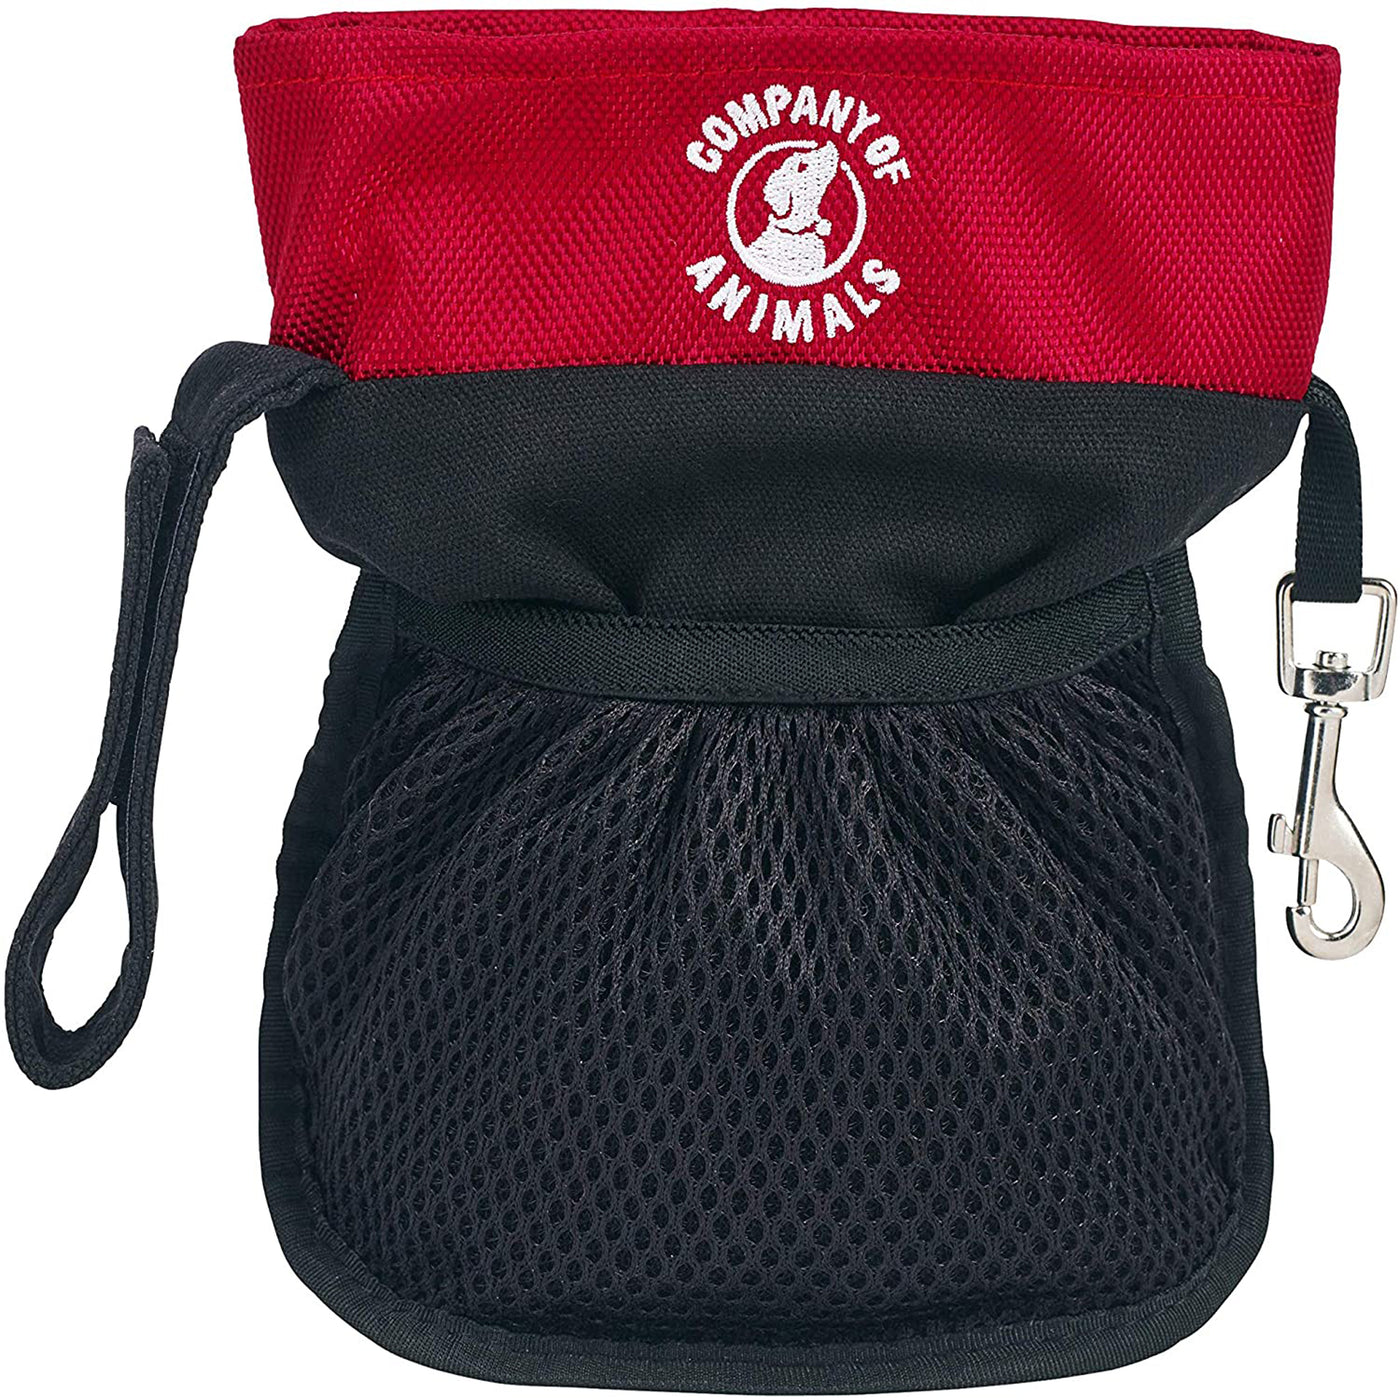 The Company Of Animals Dog Clix Pro Treat Bag